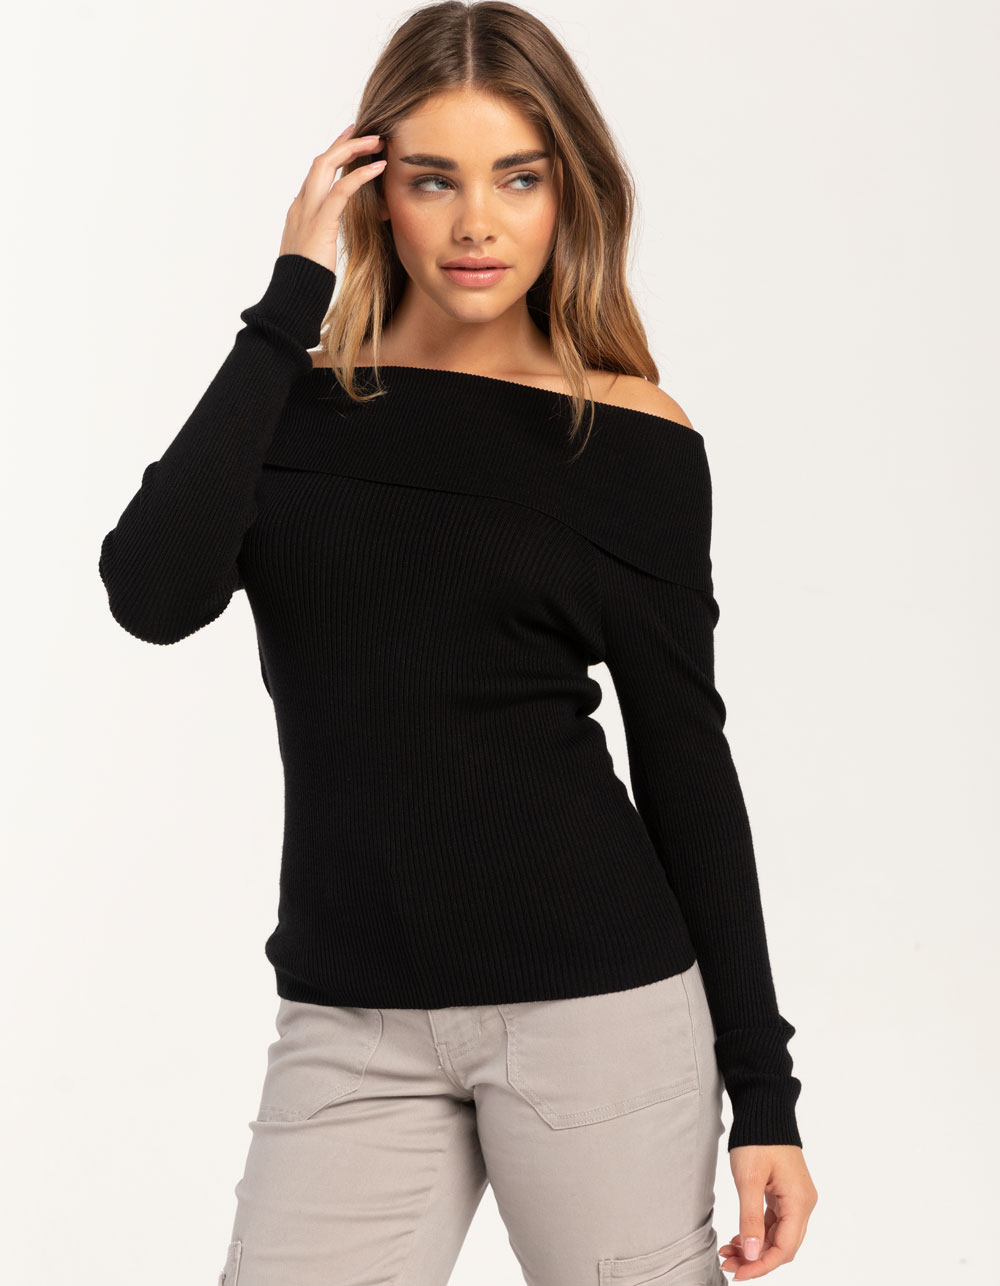 Women's Off-The-Shoulder Sweater Top